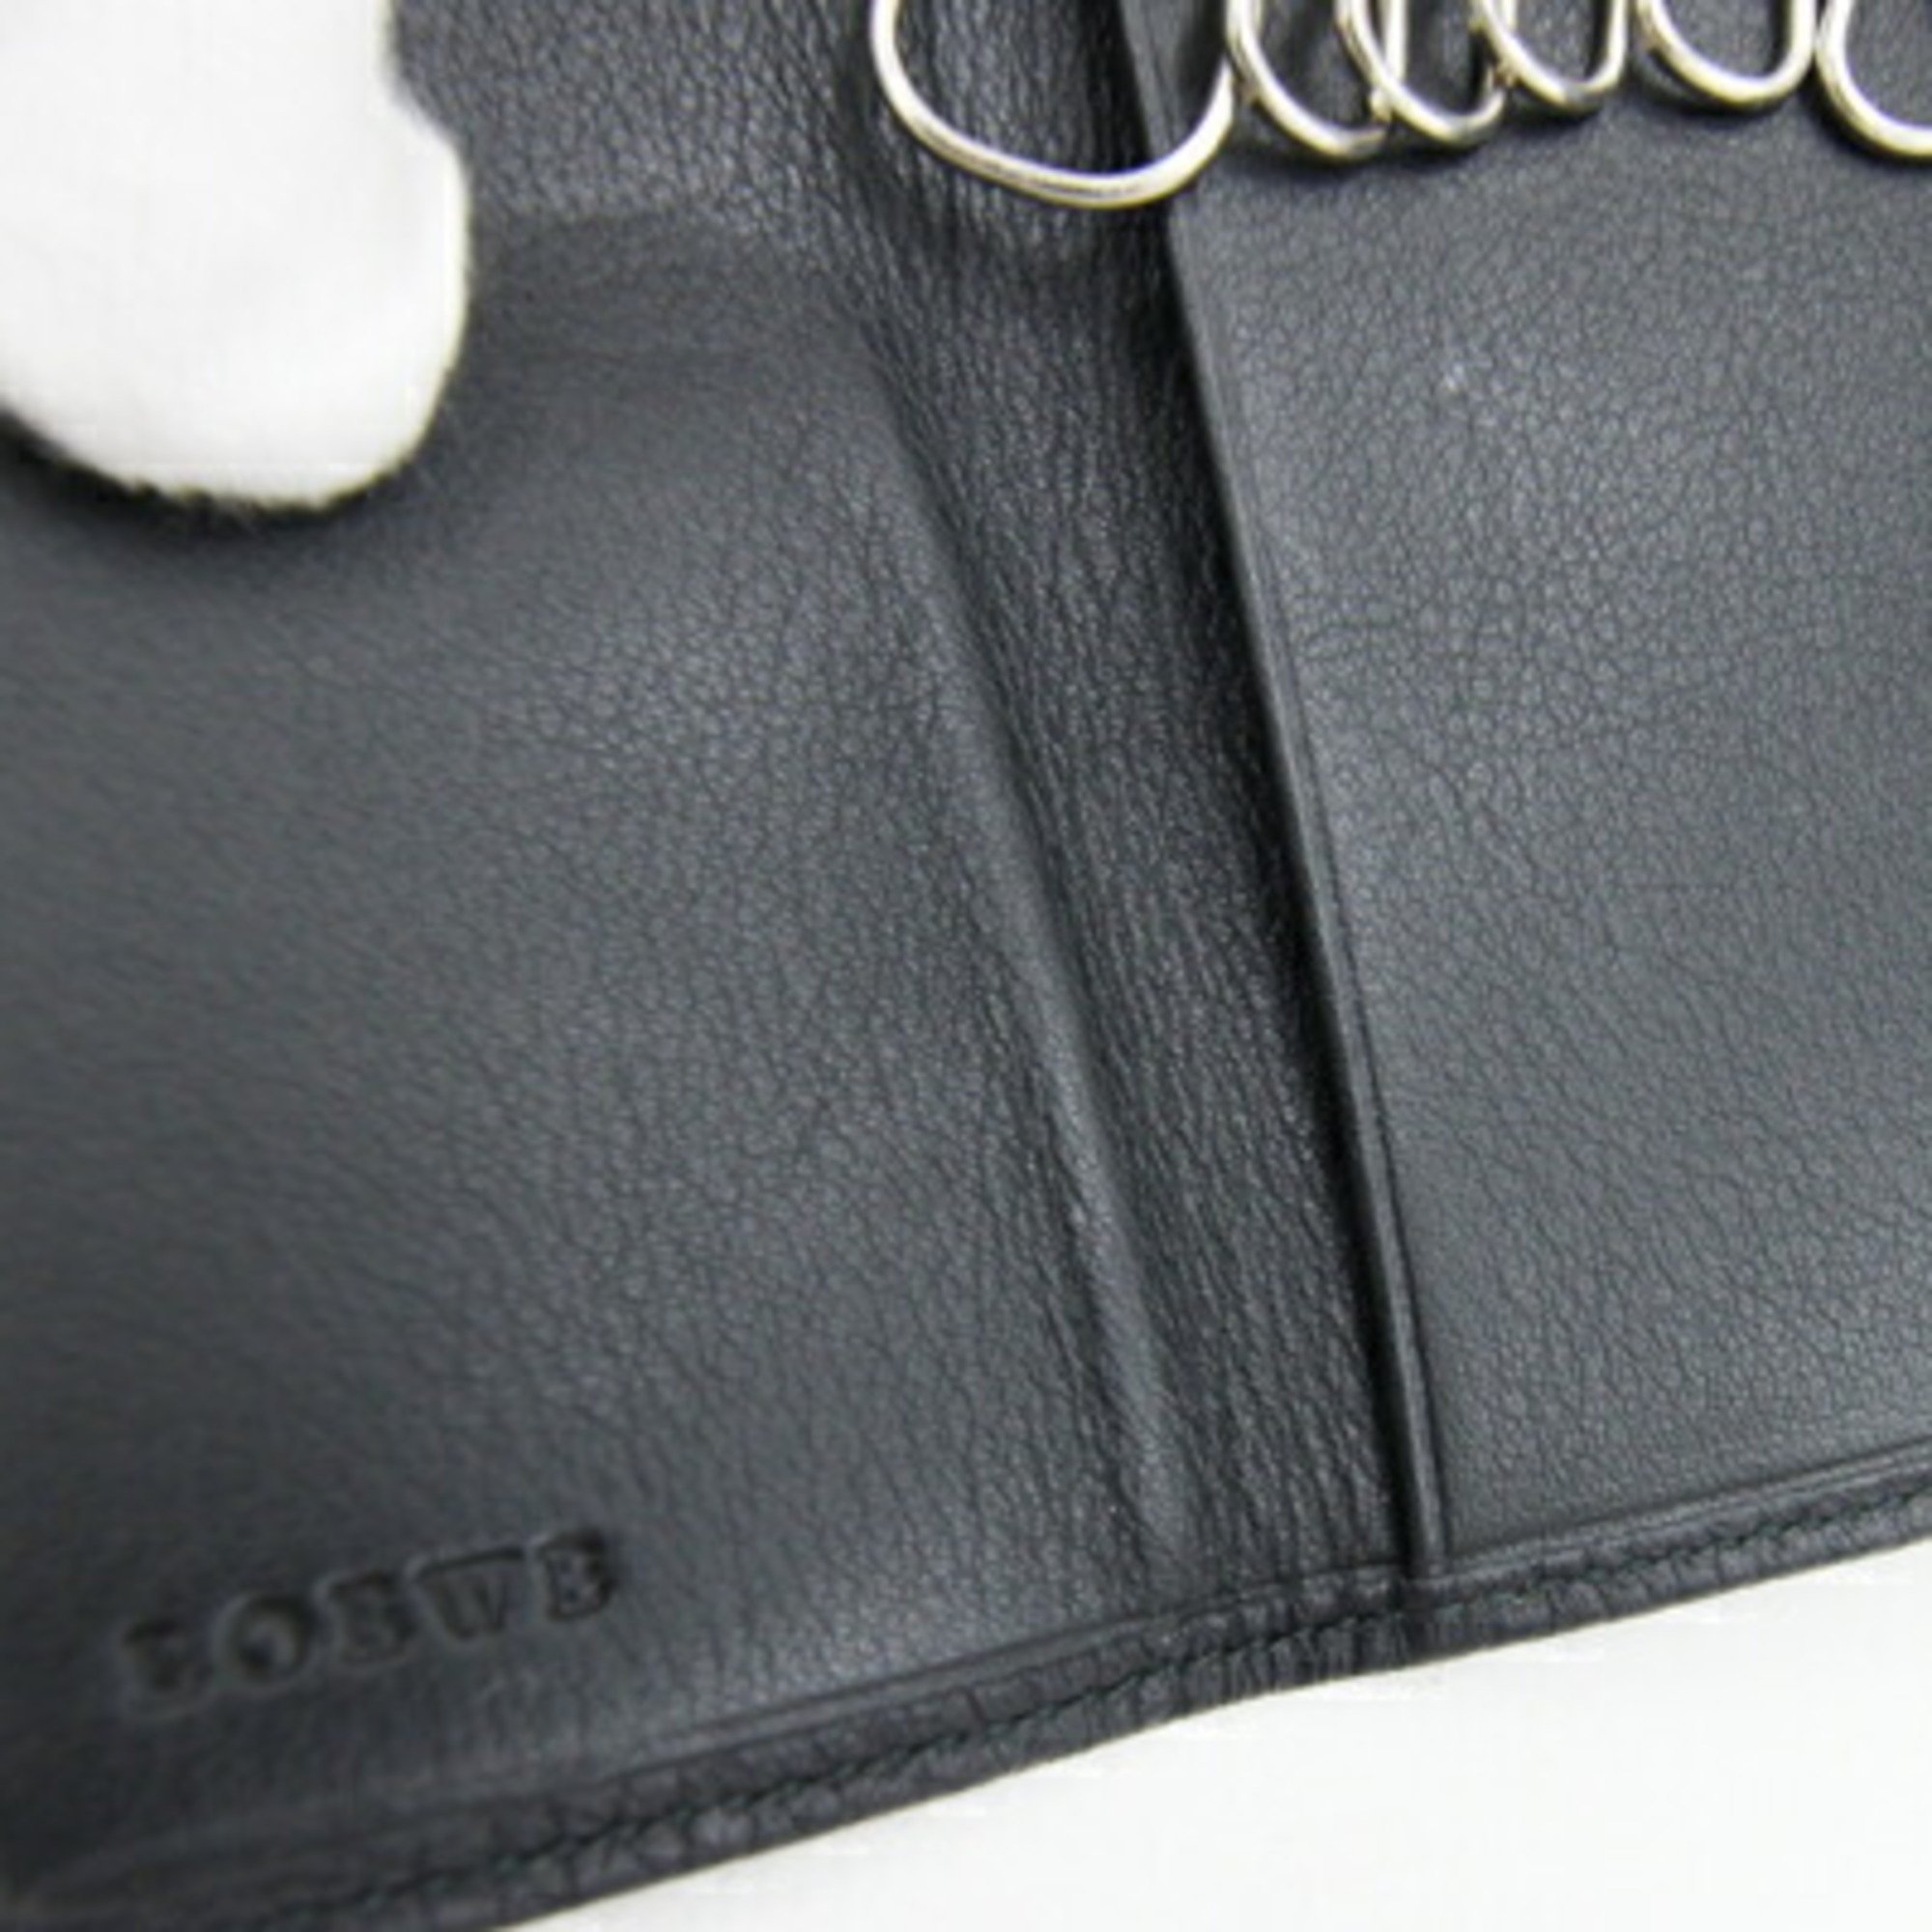 LOEWE 6-ring key case, black leather, keys, black, men's, women's